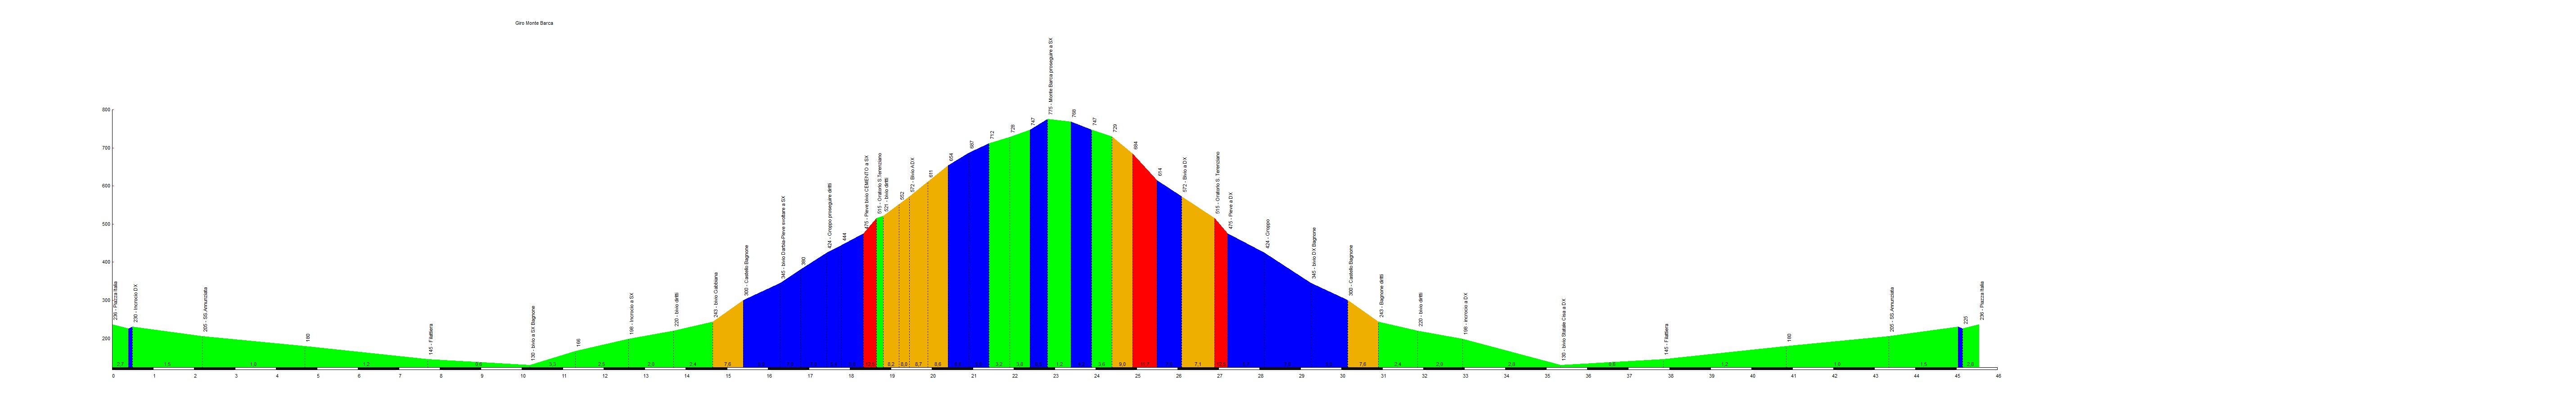 Giro Monte Barca - altimetria